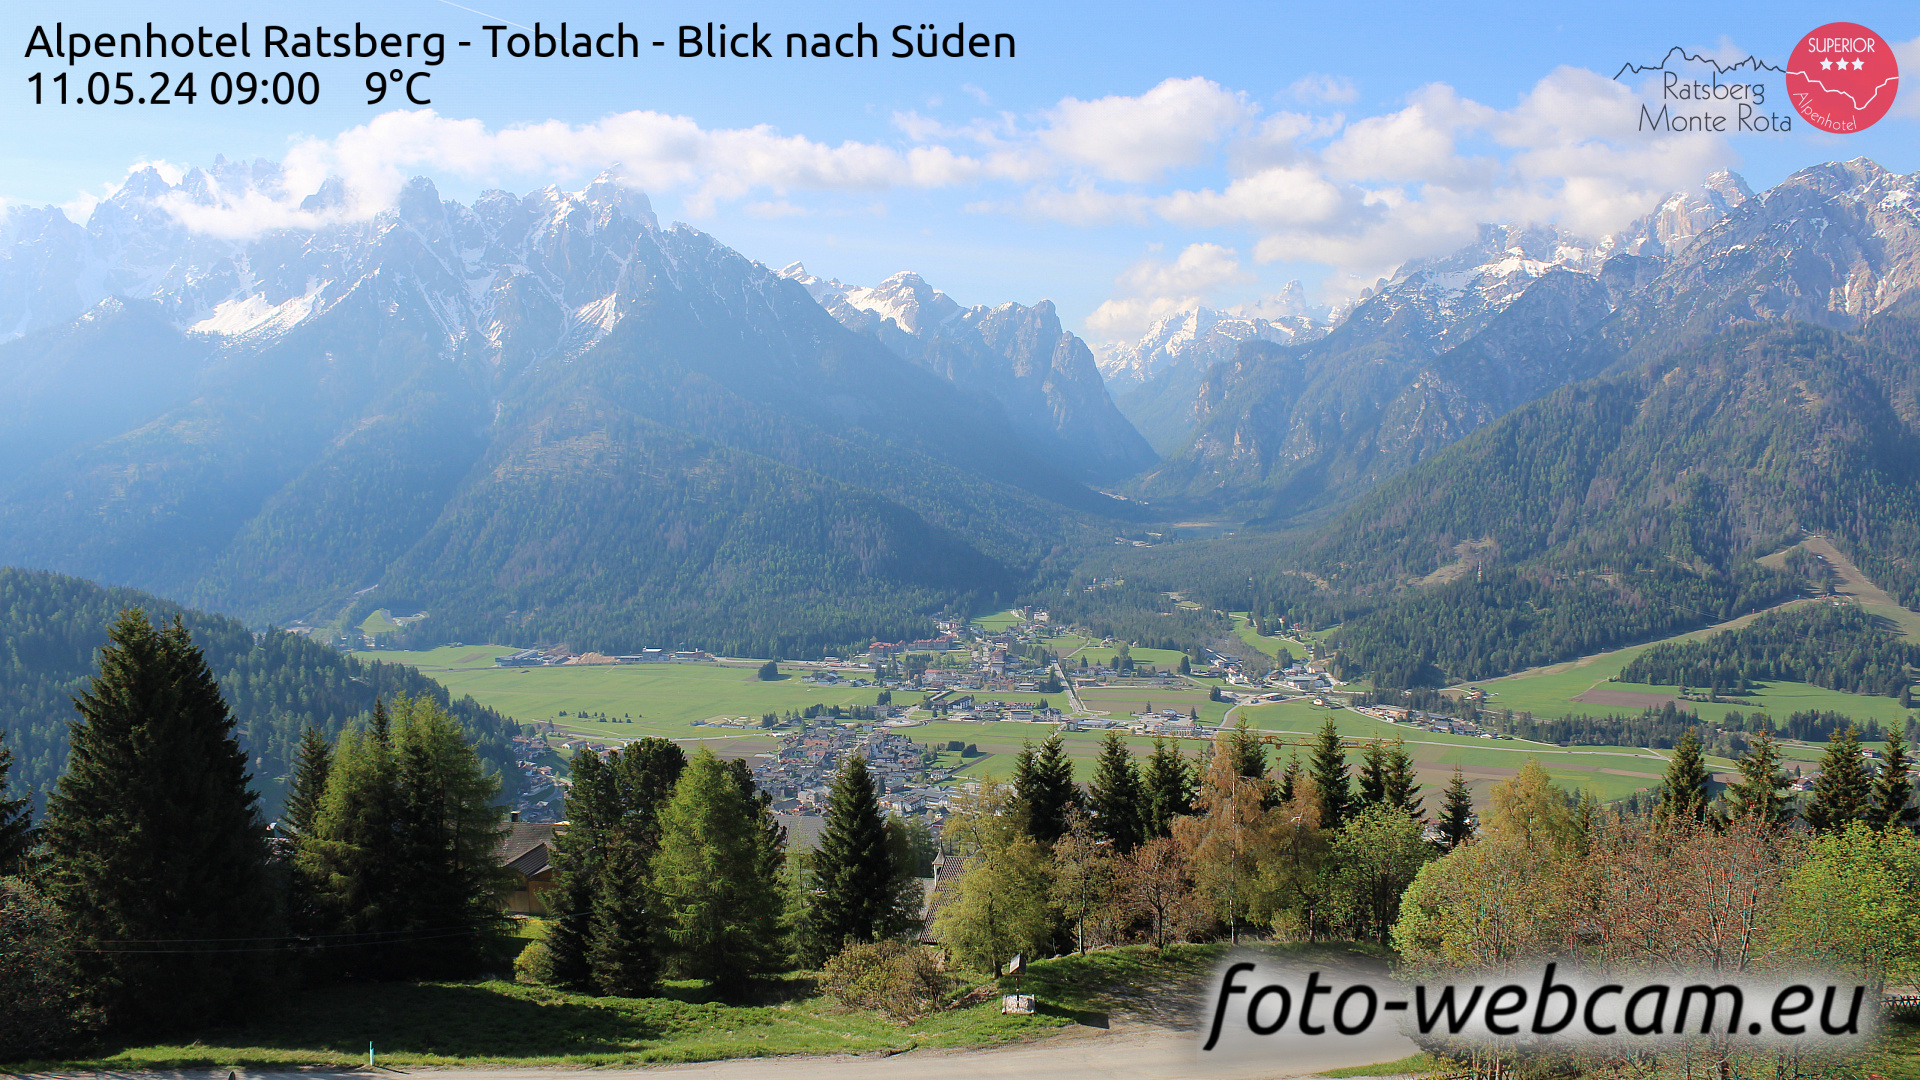 Toblach (Dolomites) Thu. 09:03